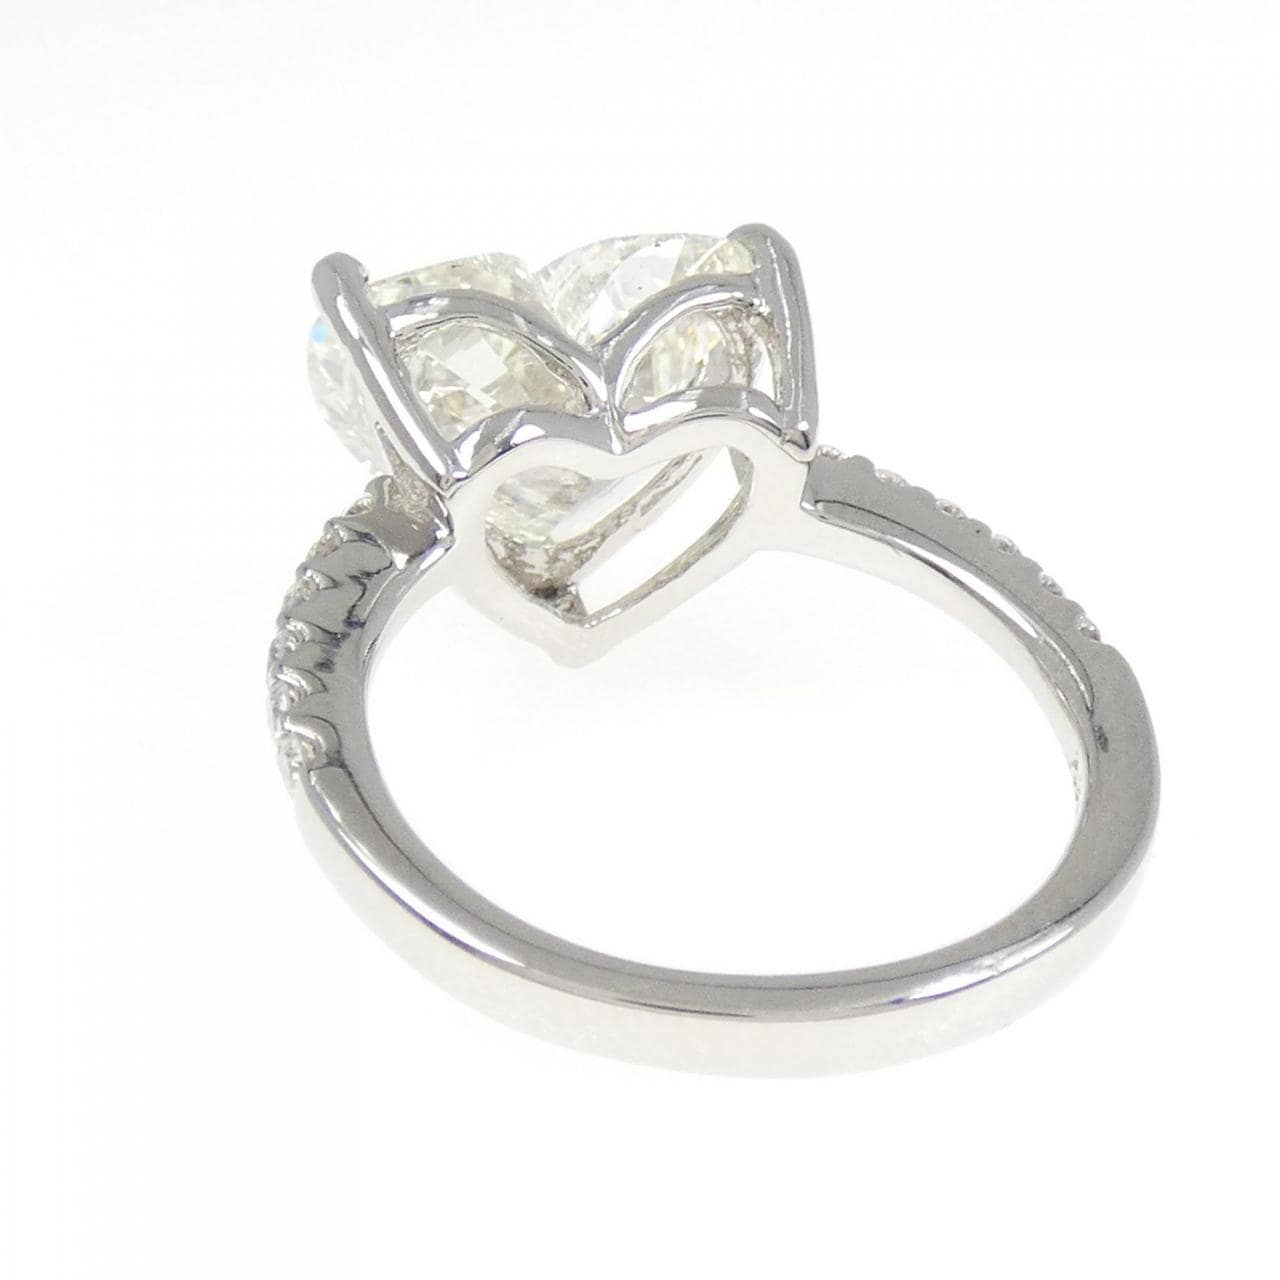 [Remake] PT Diamond Ring 5.126CT L SI2 Heart Shape